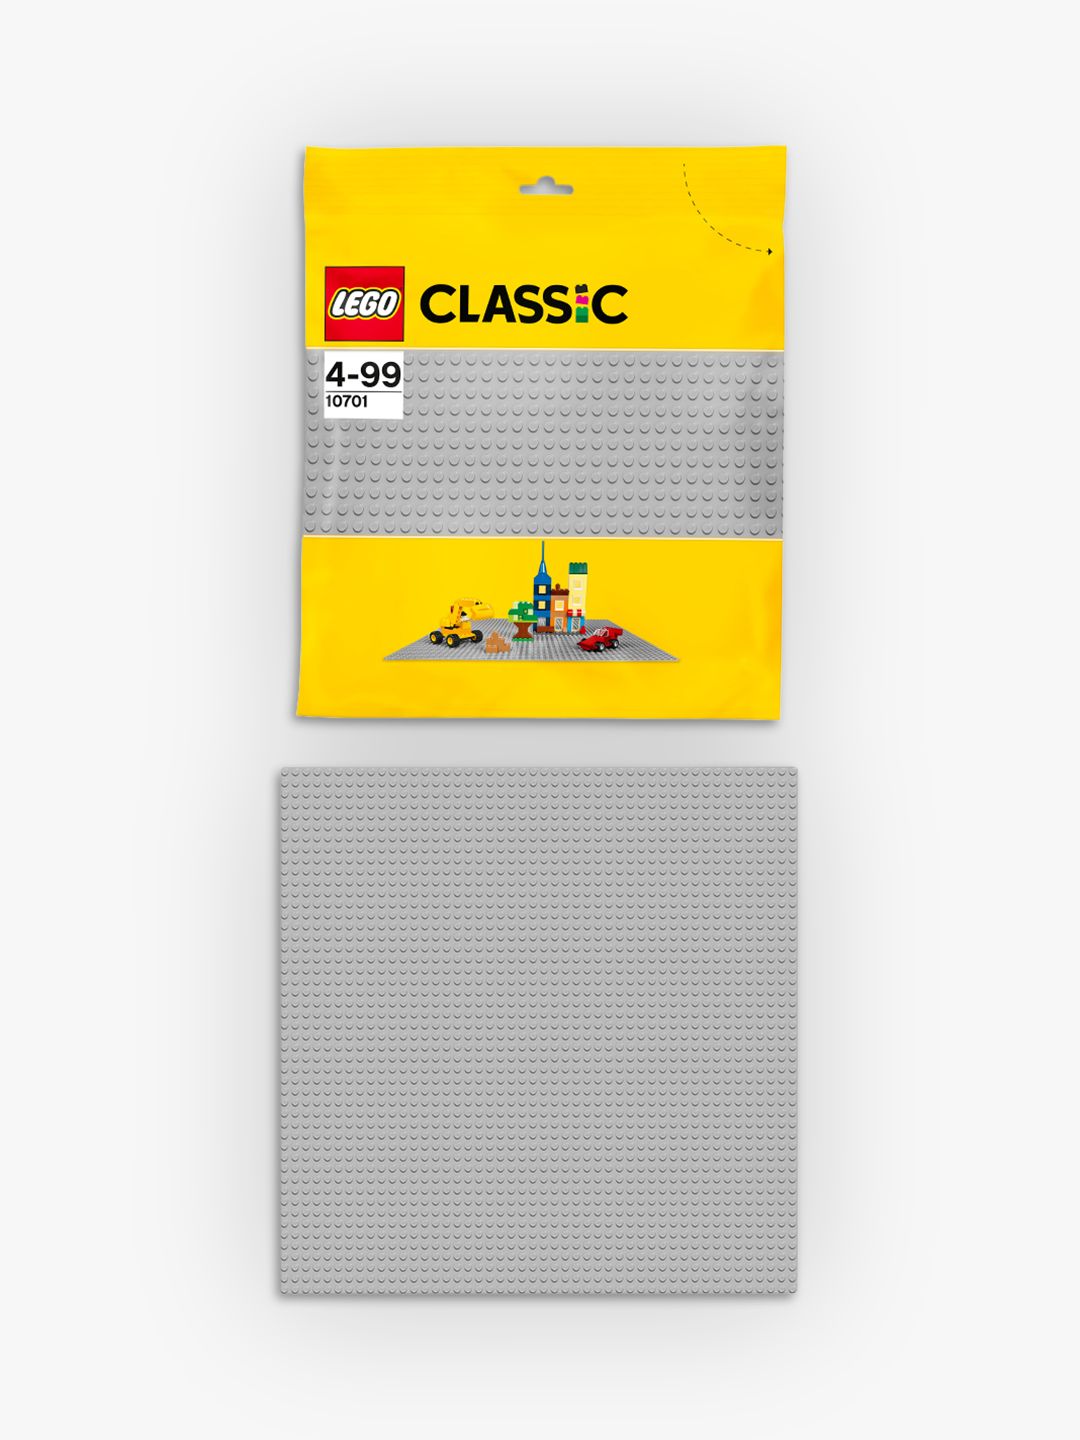 lego classic gray baseplate 10701